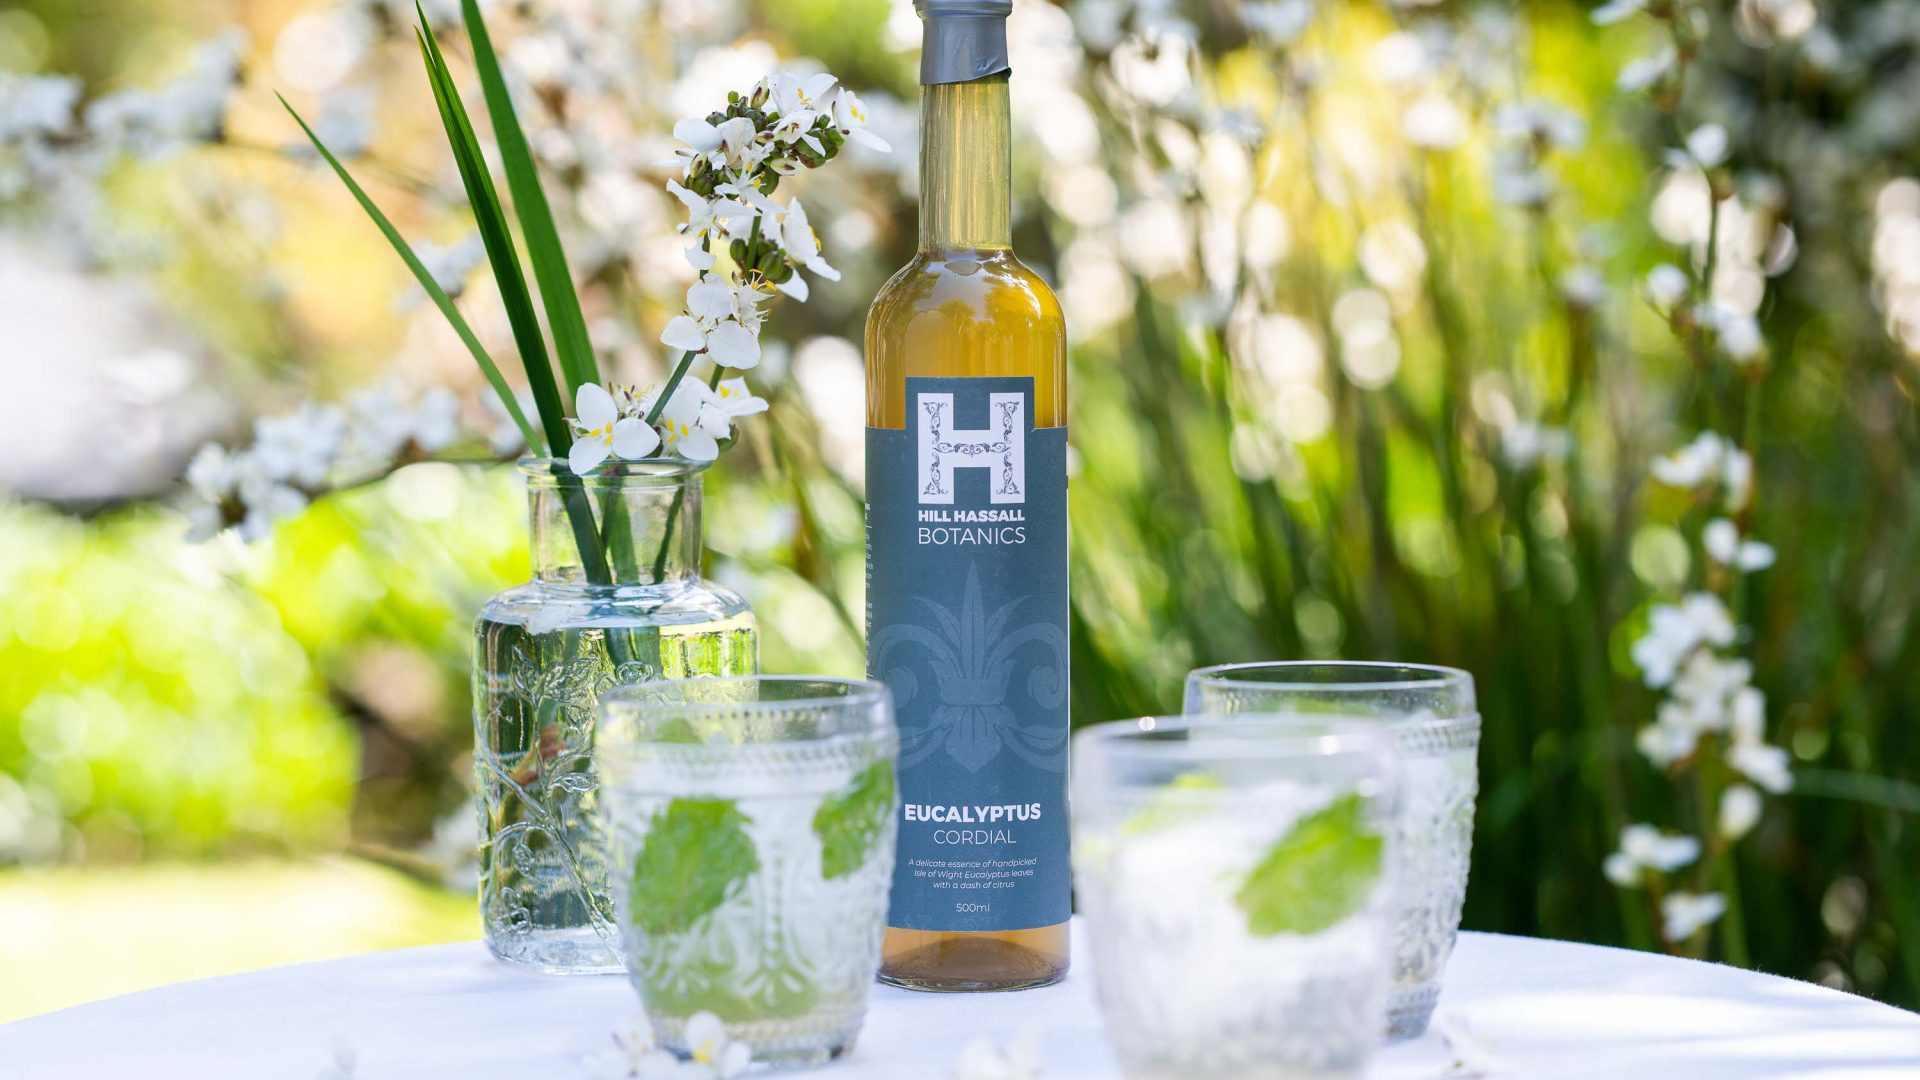 Hill Hassall Botanics drink and glasses.